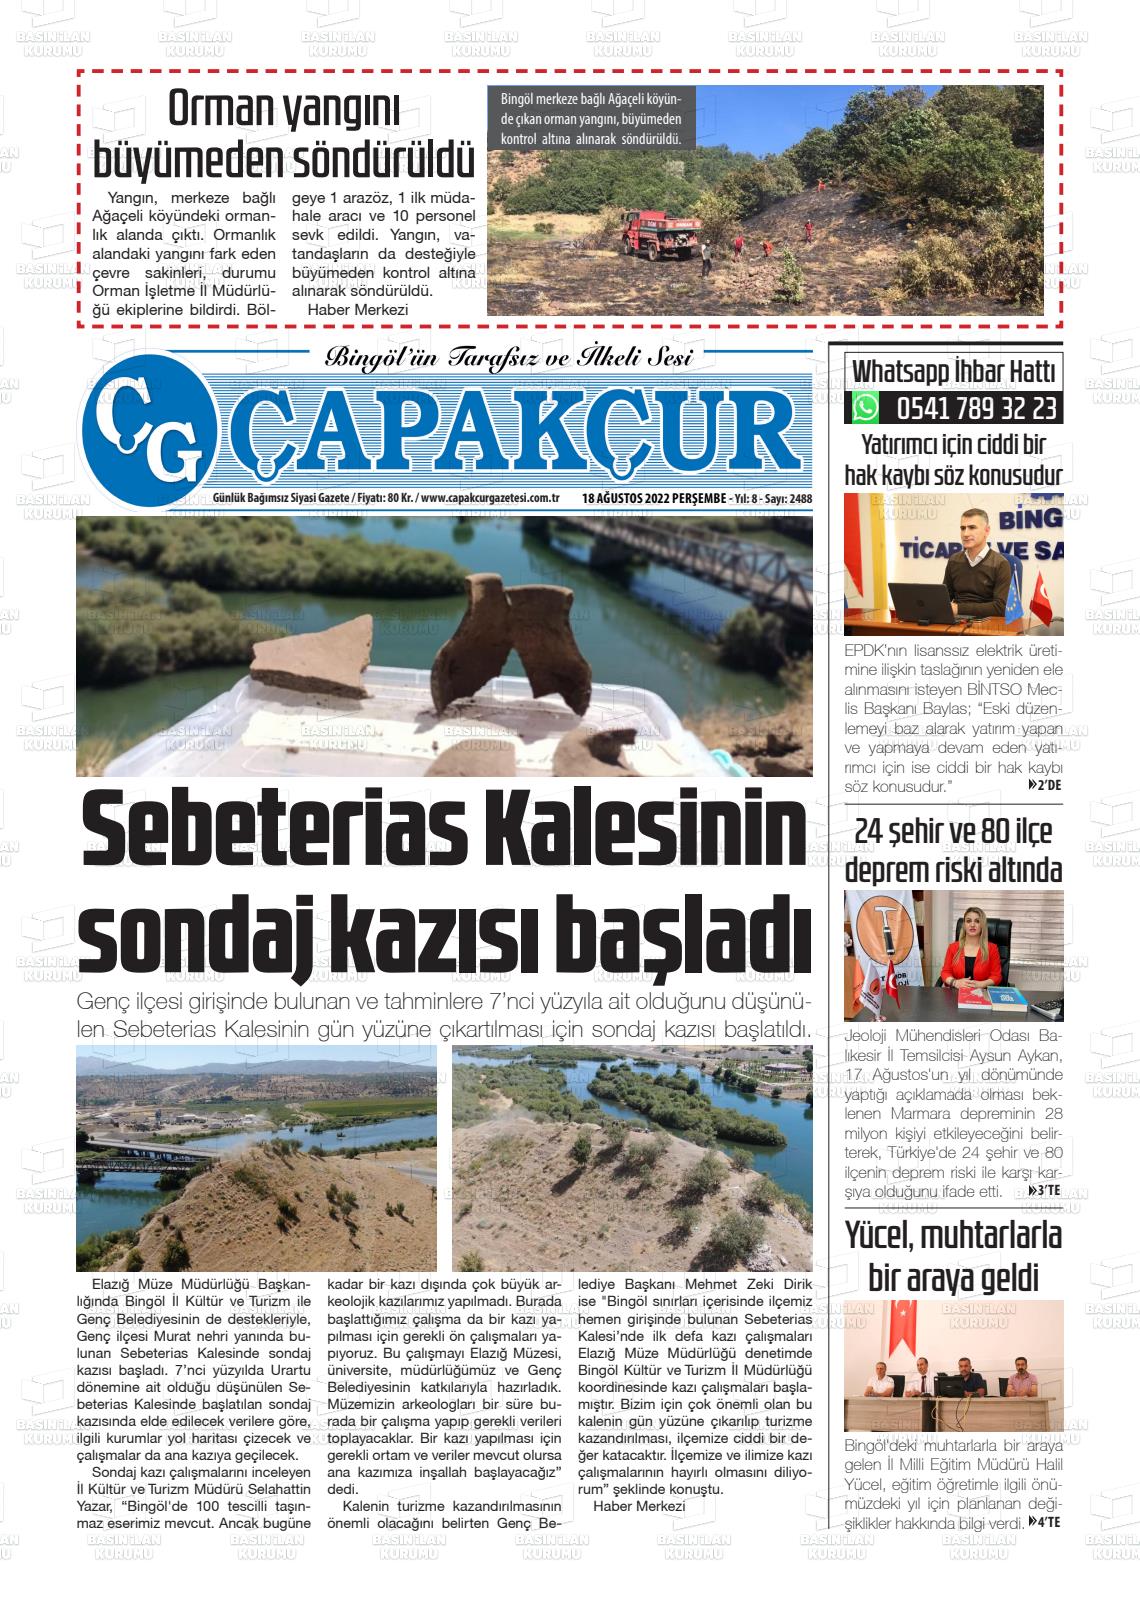 18 Ağustos 2022 Çapakçur Gazete Manşeti